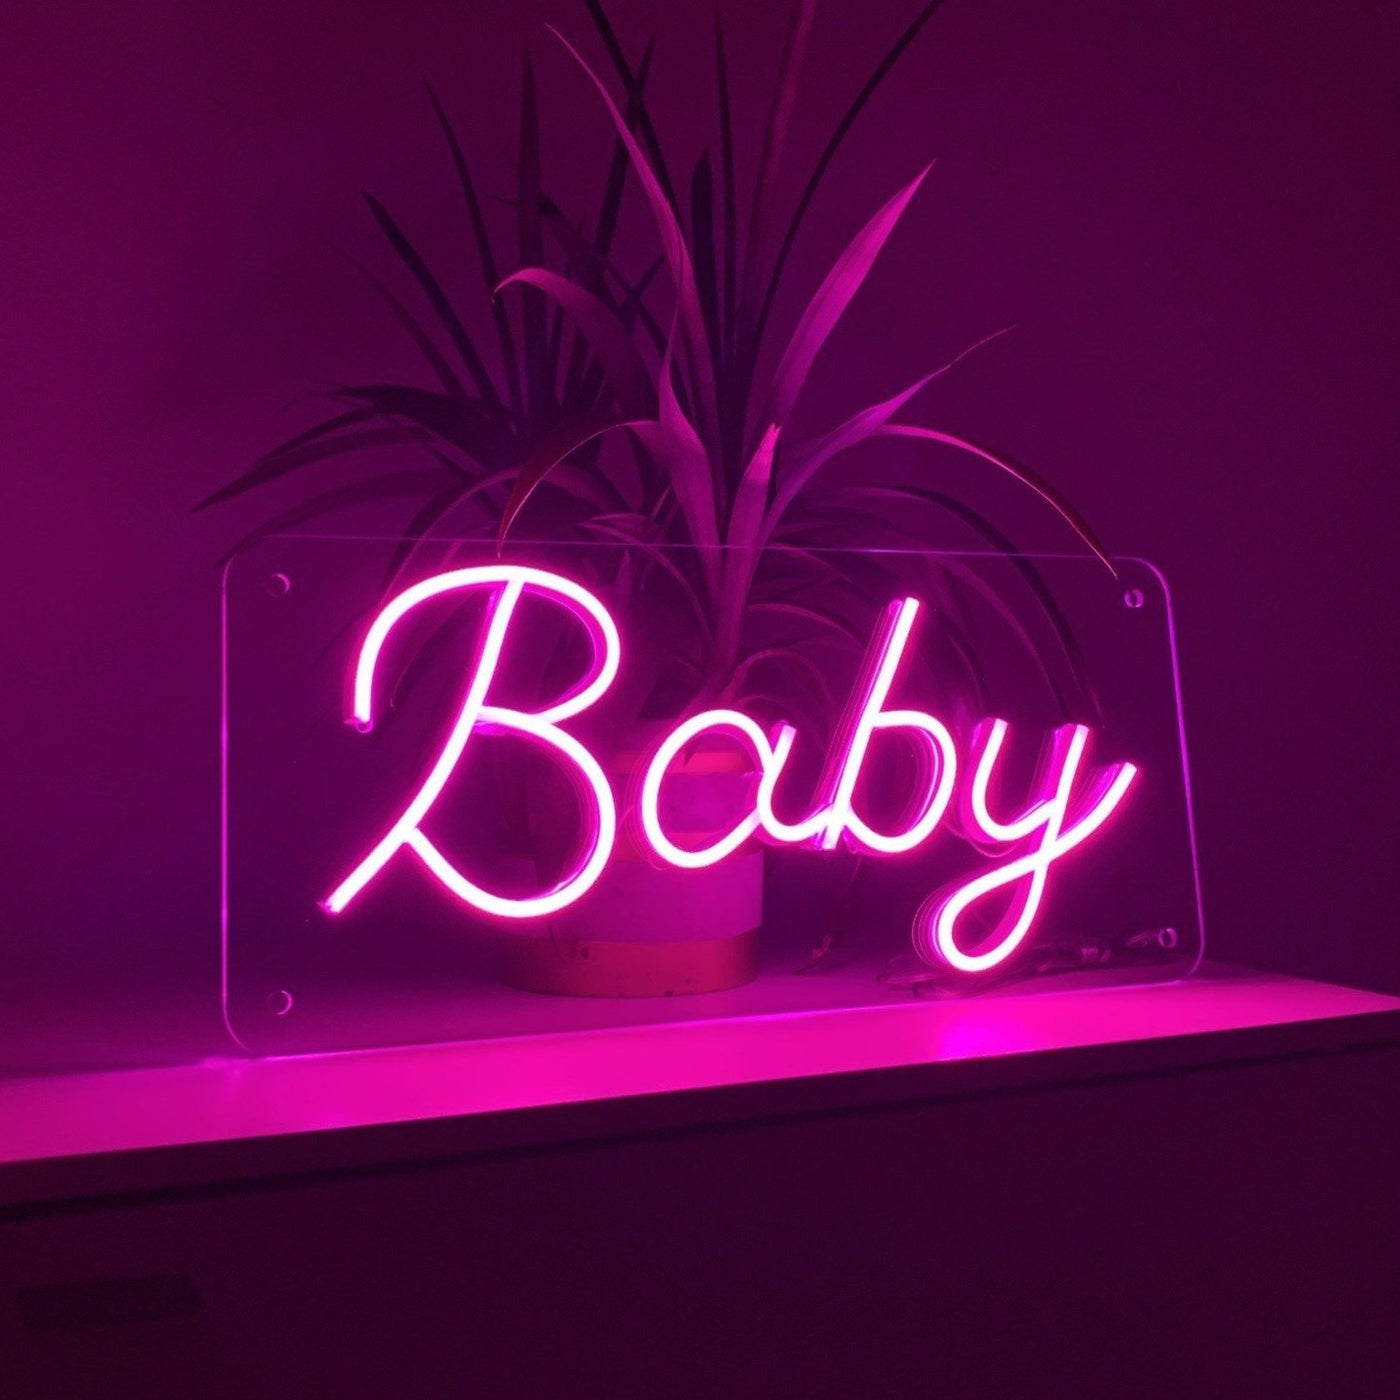 "Baby" neon sign / box